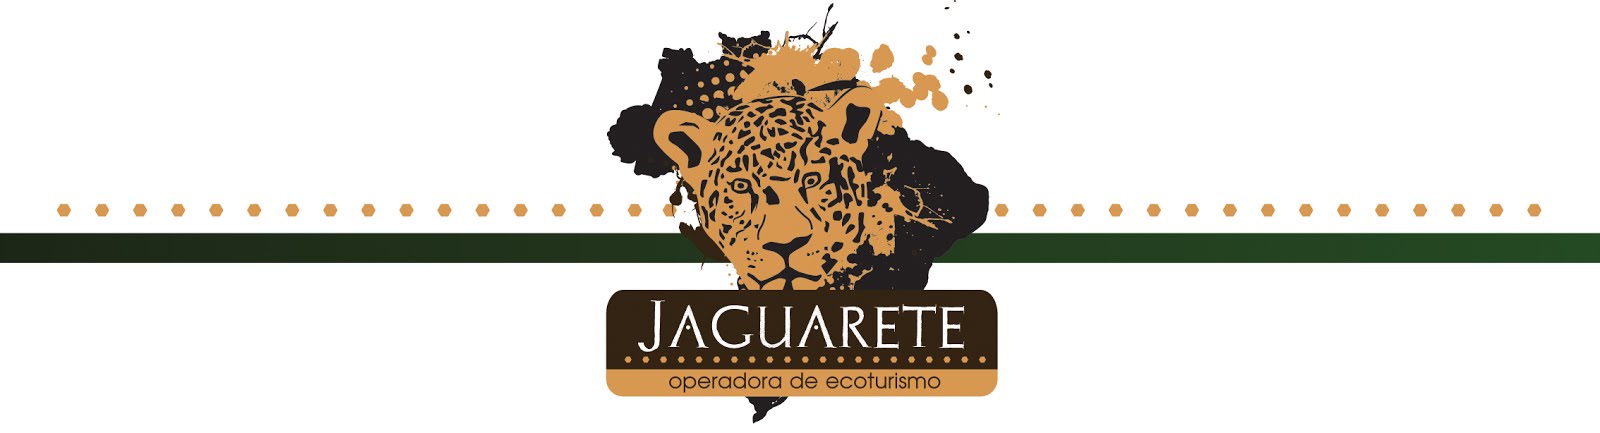 Jaguarete Operadora de Ecoturismo